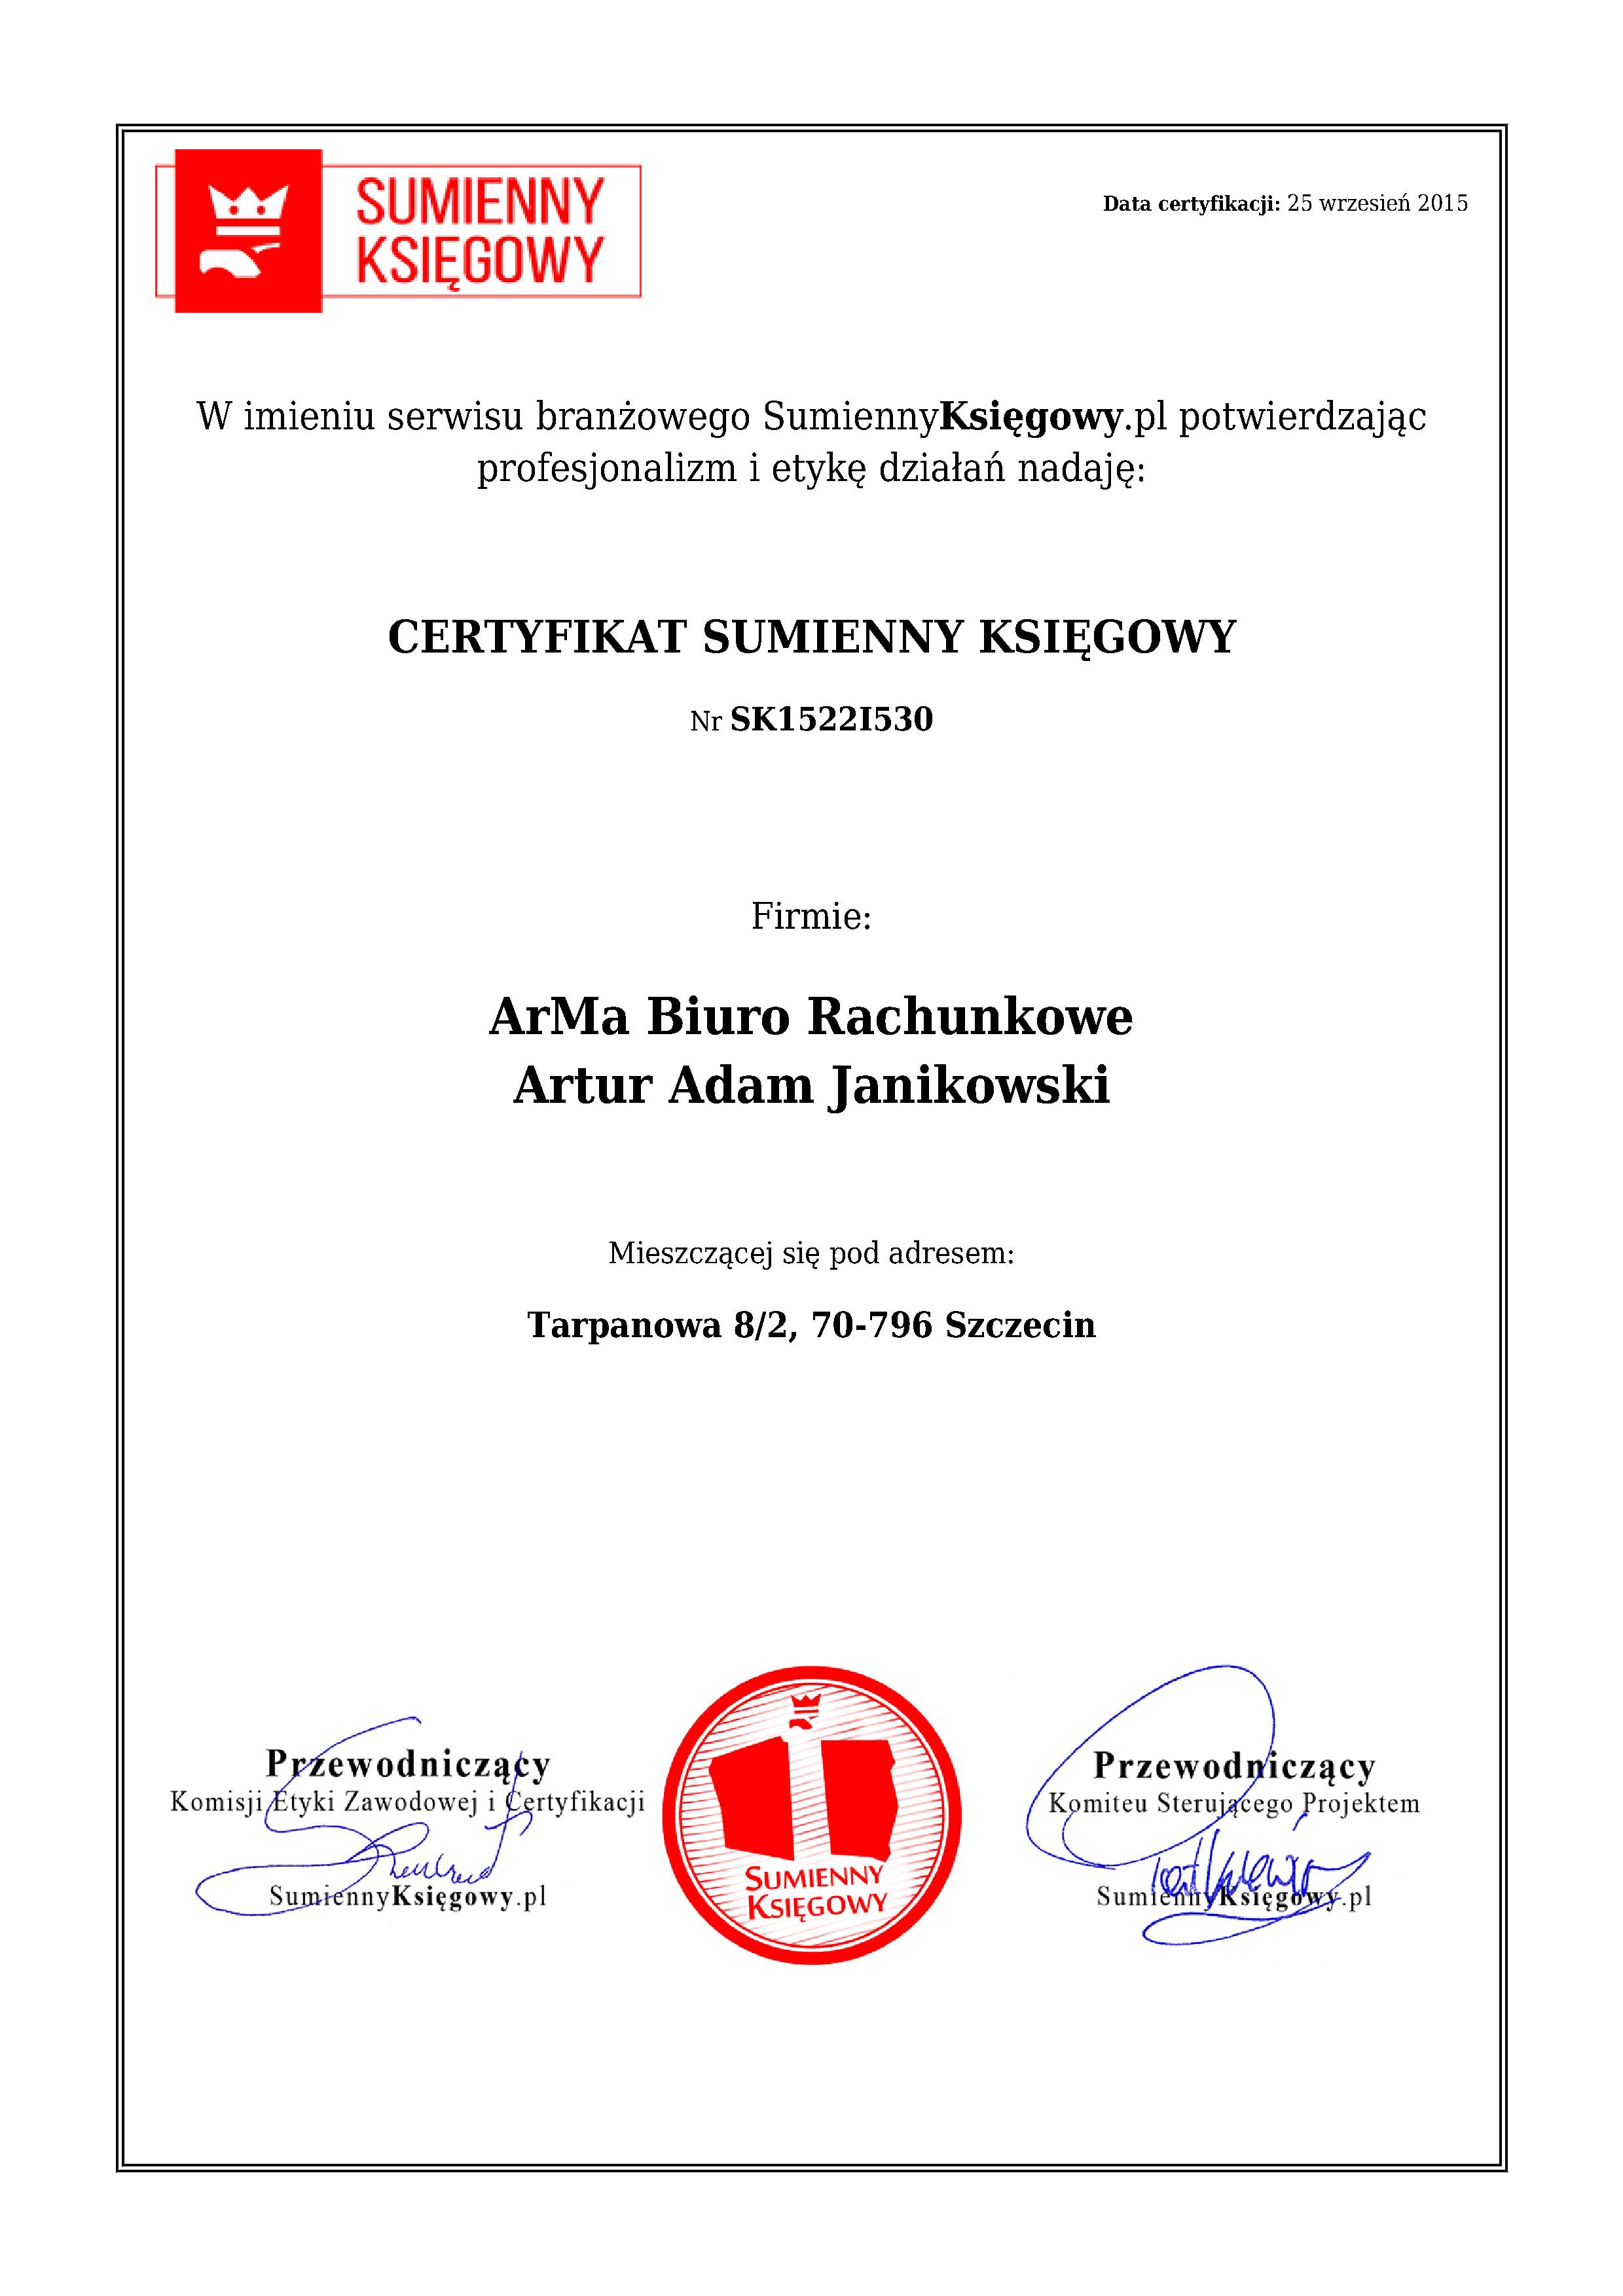 ArMa Biuro Rachunkowe Artur Adam Janikowski certyfikat 1